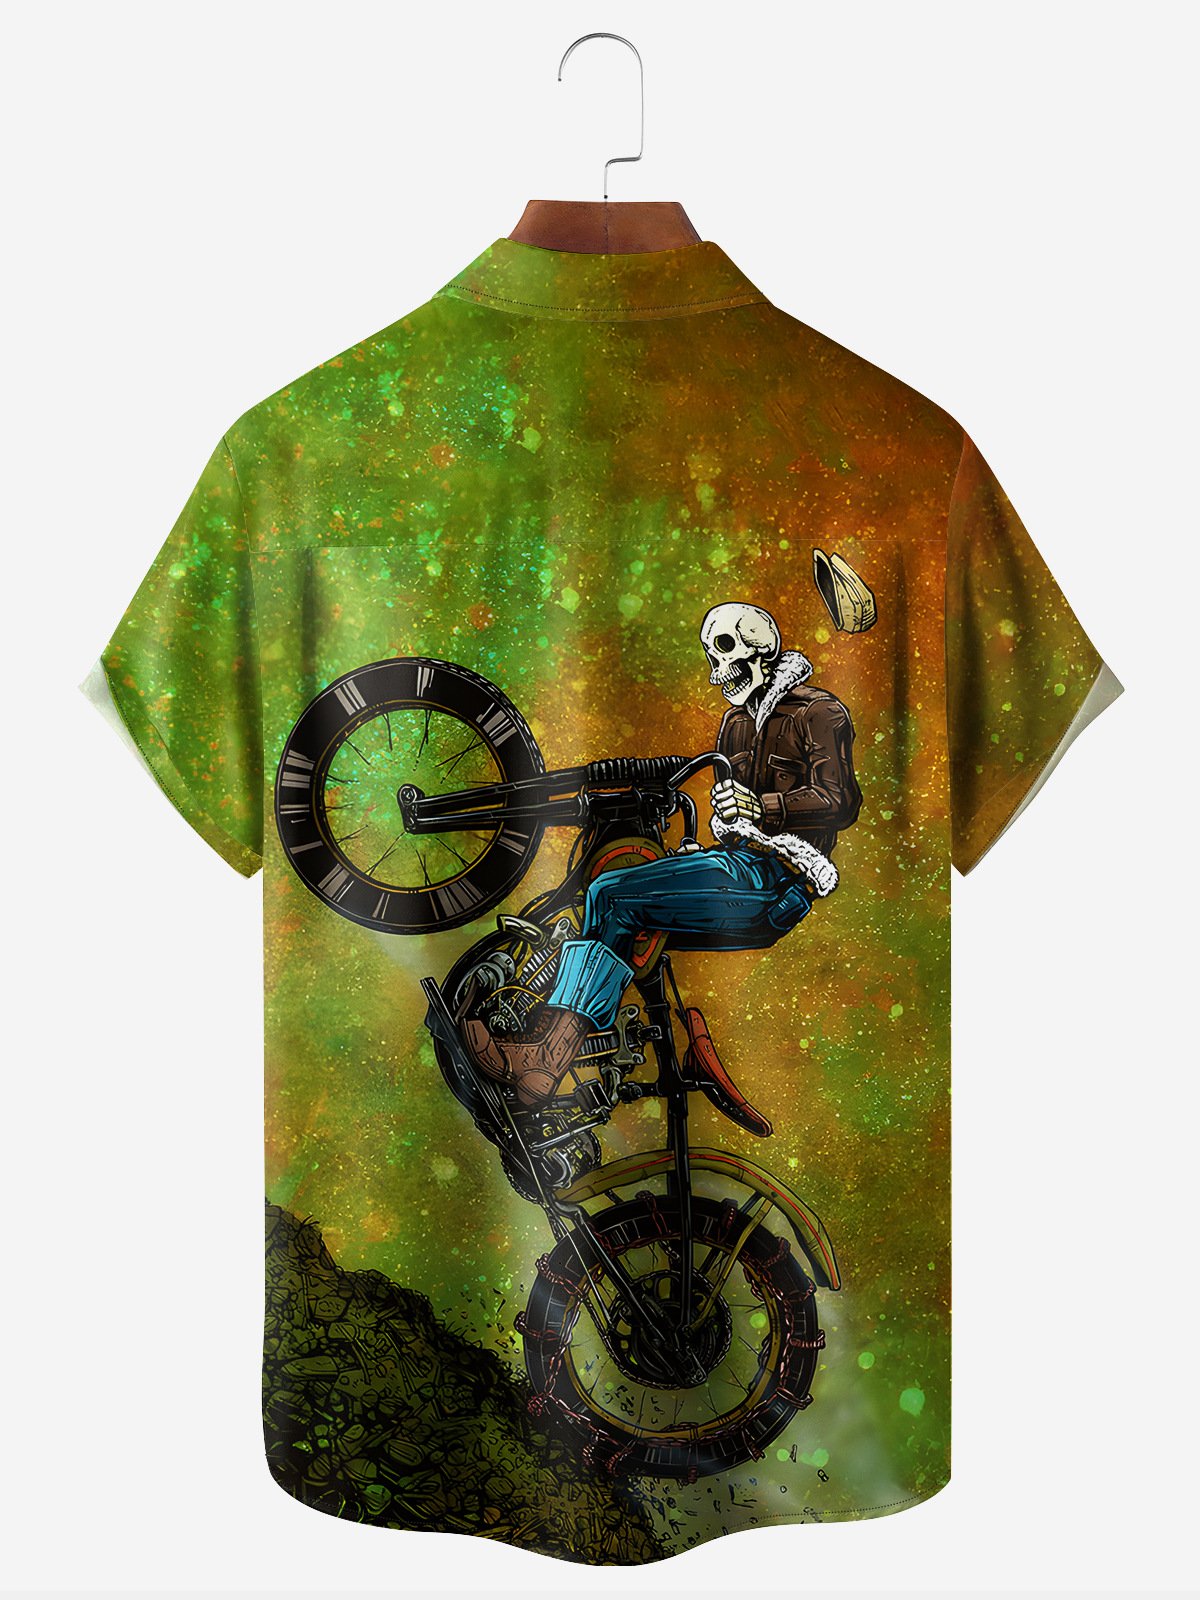 Harley Hillclimber Shirt By David Lozeau